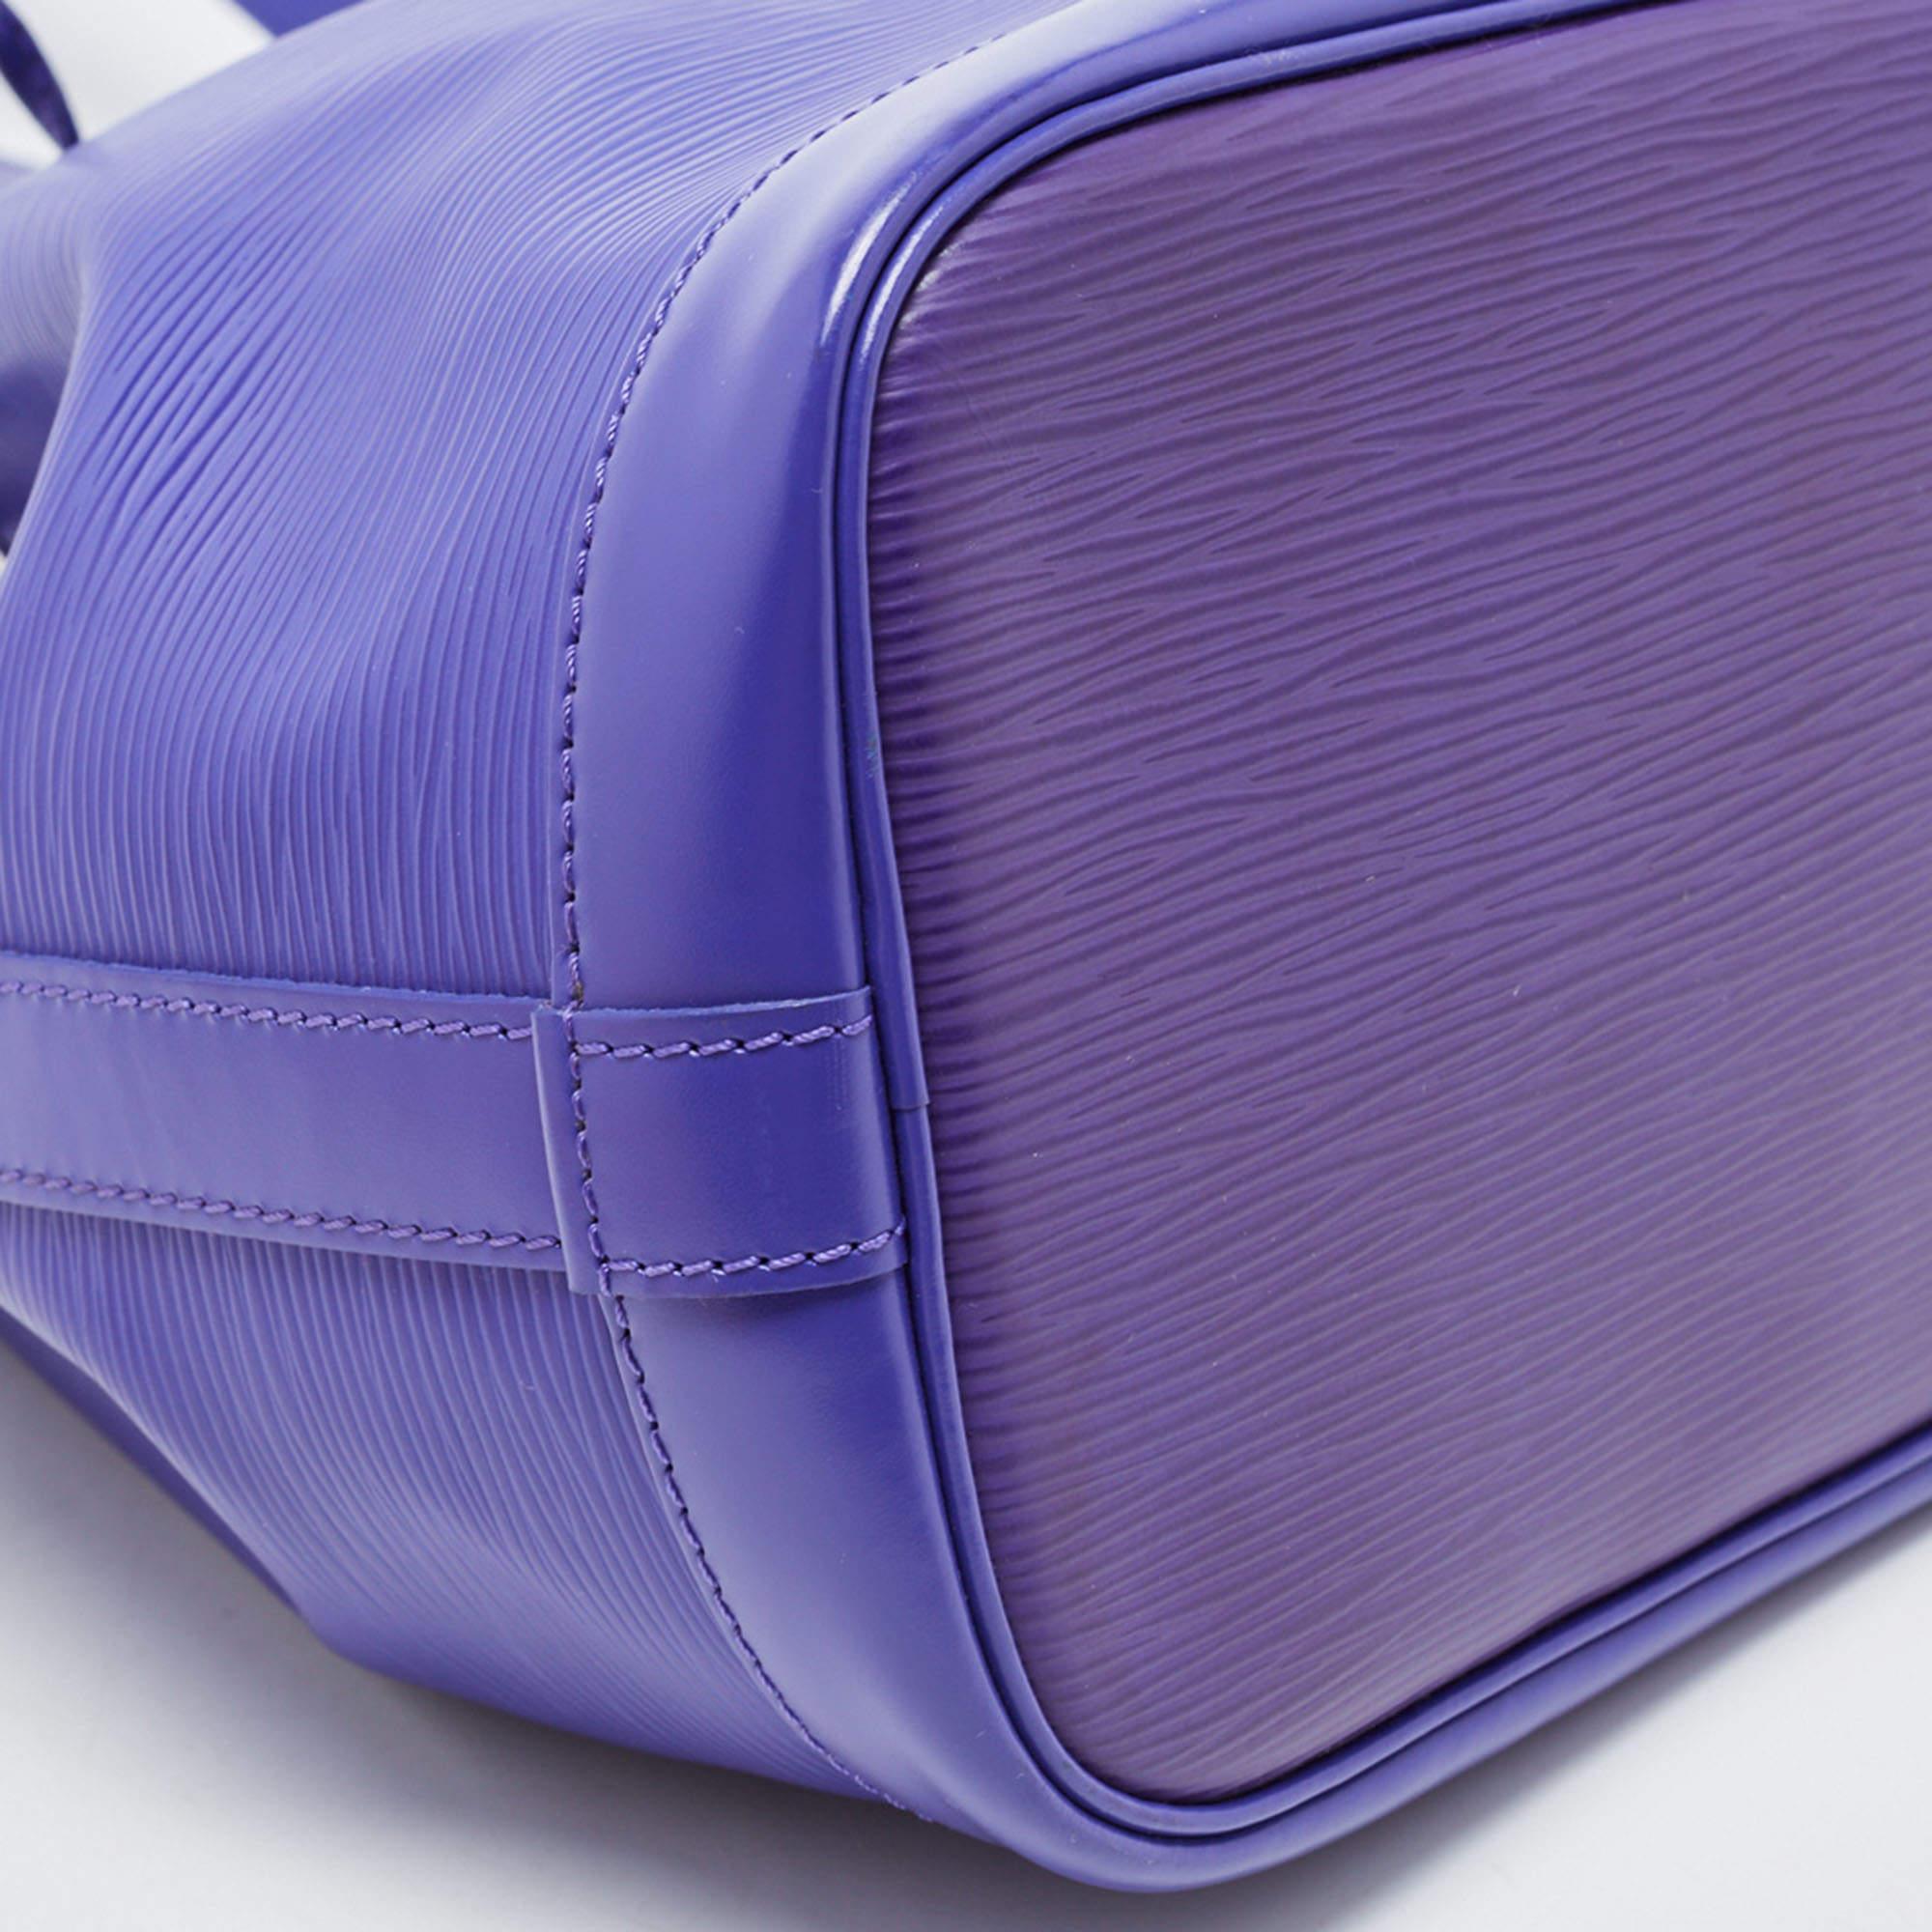 Louis Vuitton Figue Epi Leather Neonoe Bag In Good Condition For Sale In Dubai, Al Qouz 2